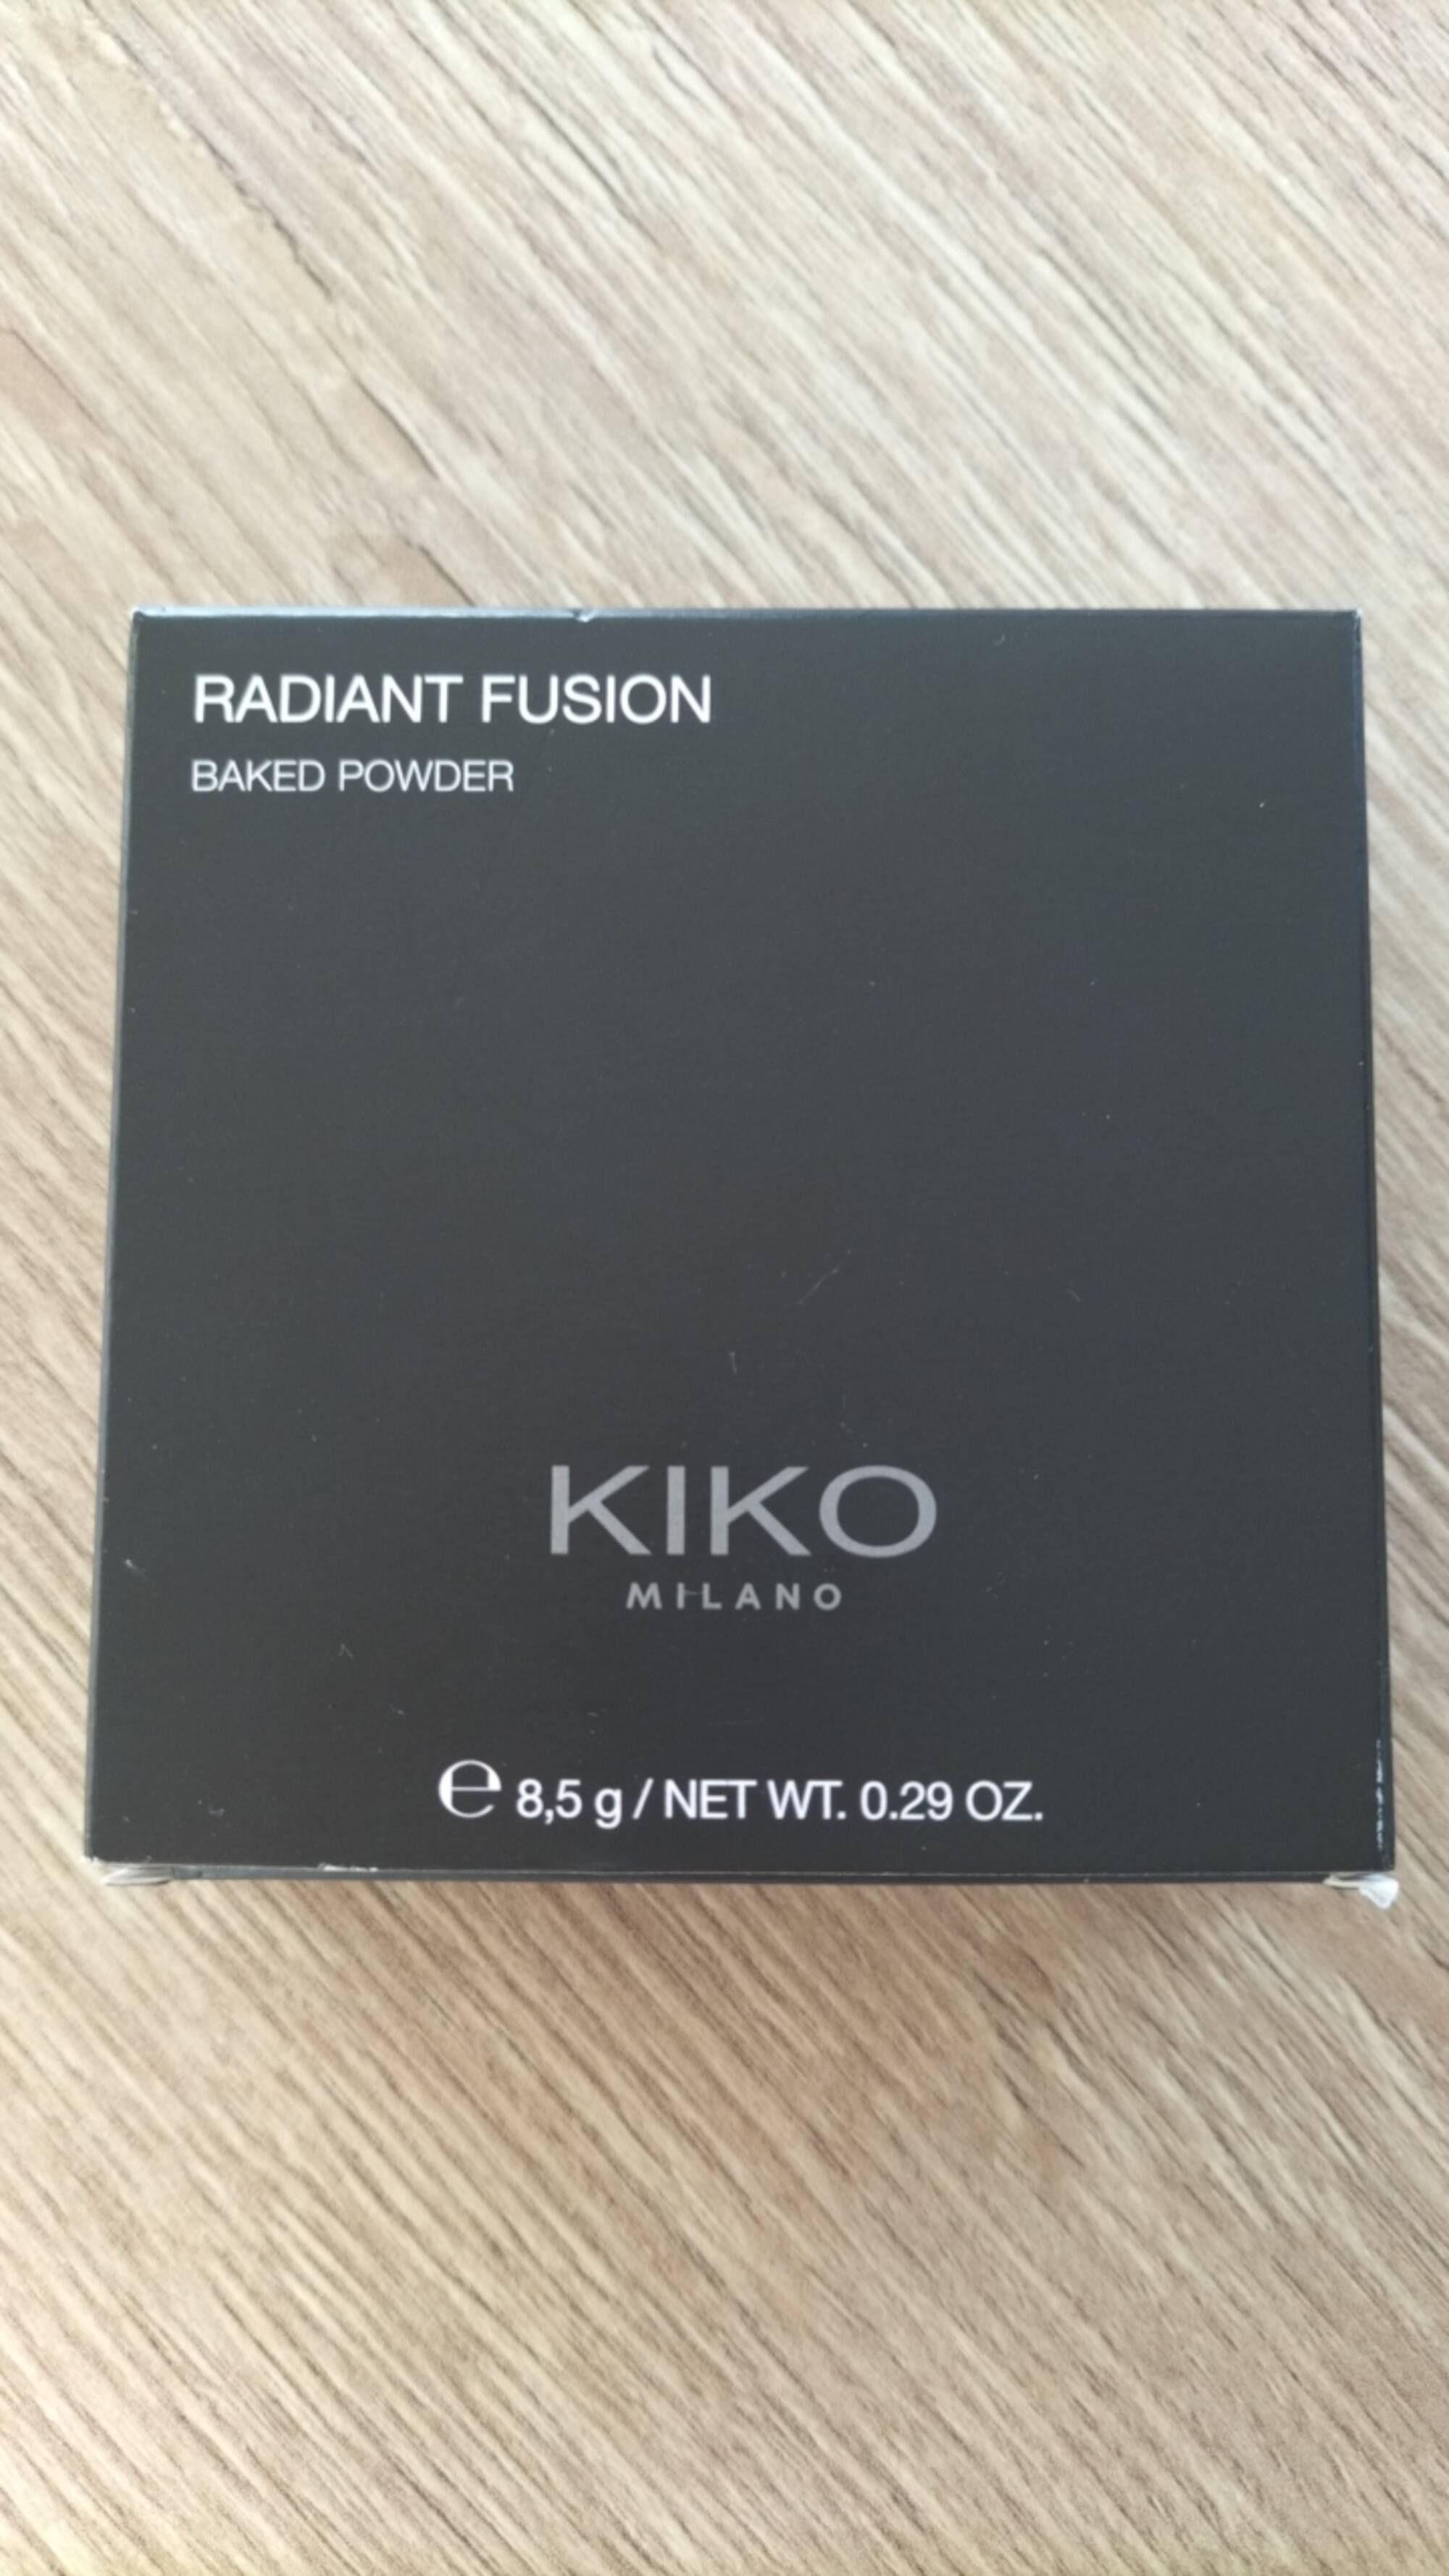 KIKO MILANO - Radiant fusion - Baked powder